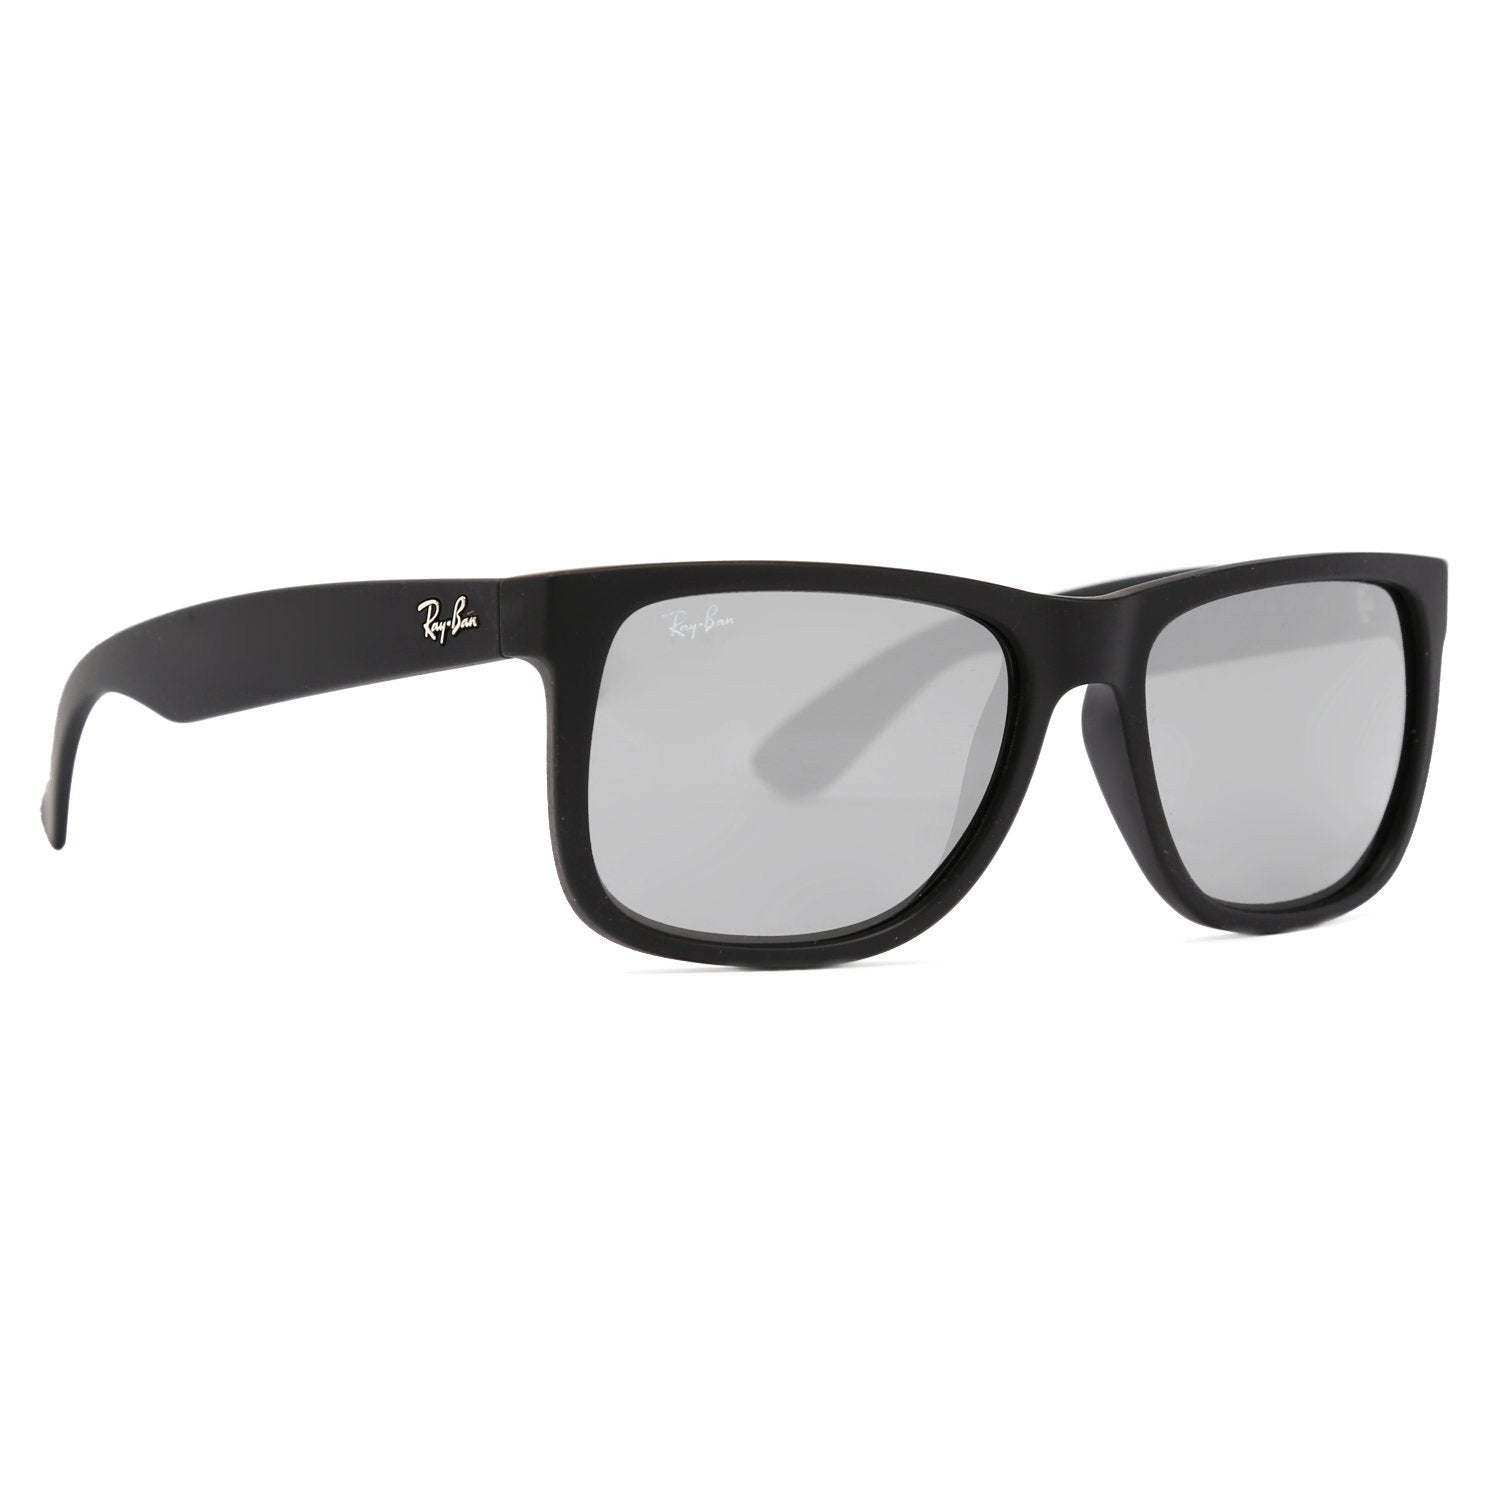 Ray Ban Justin 55mm RB4165 Sunglasses